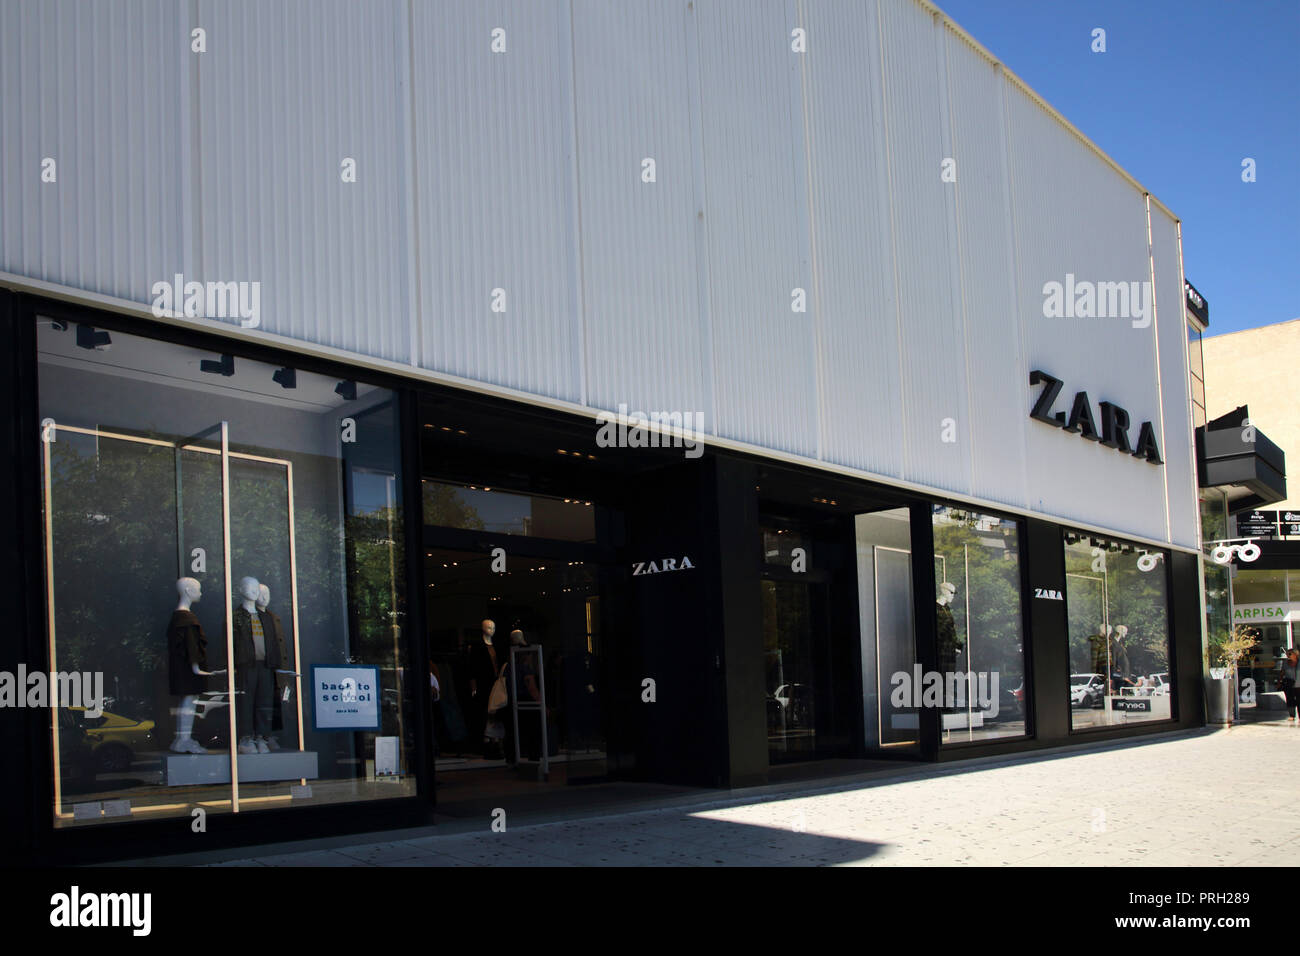 Glyfada Athens Greece Zara Clothes Shop Stock Photo - Alamy